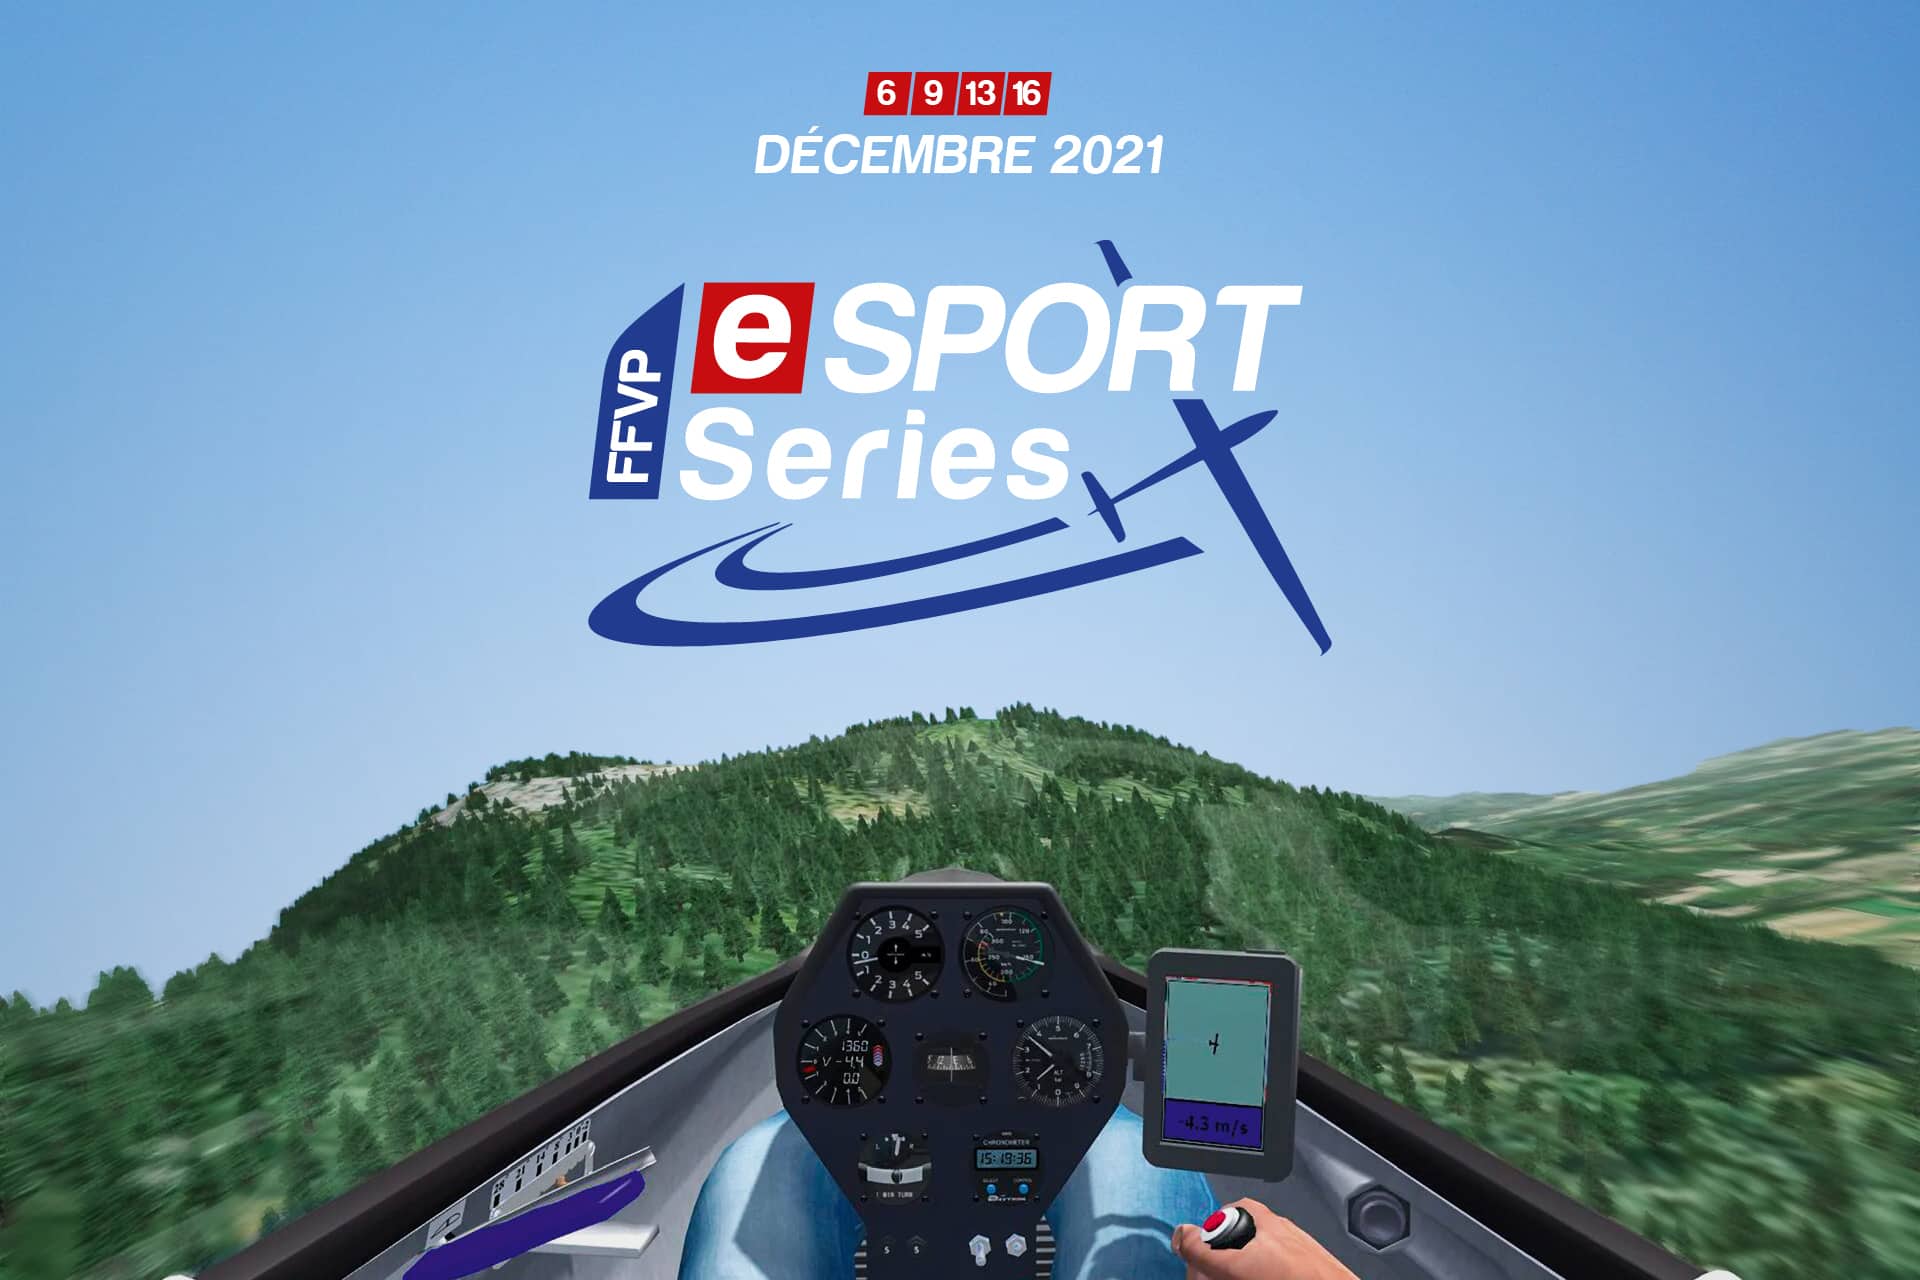 EsportSeries-SITE-Decembre-2021.jpg